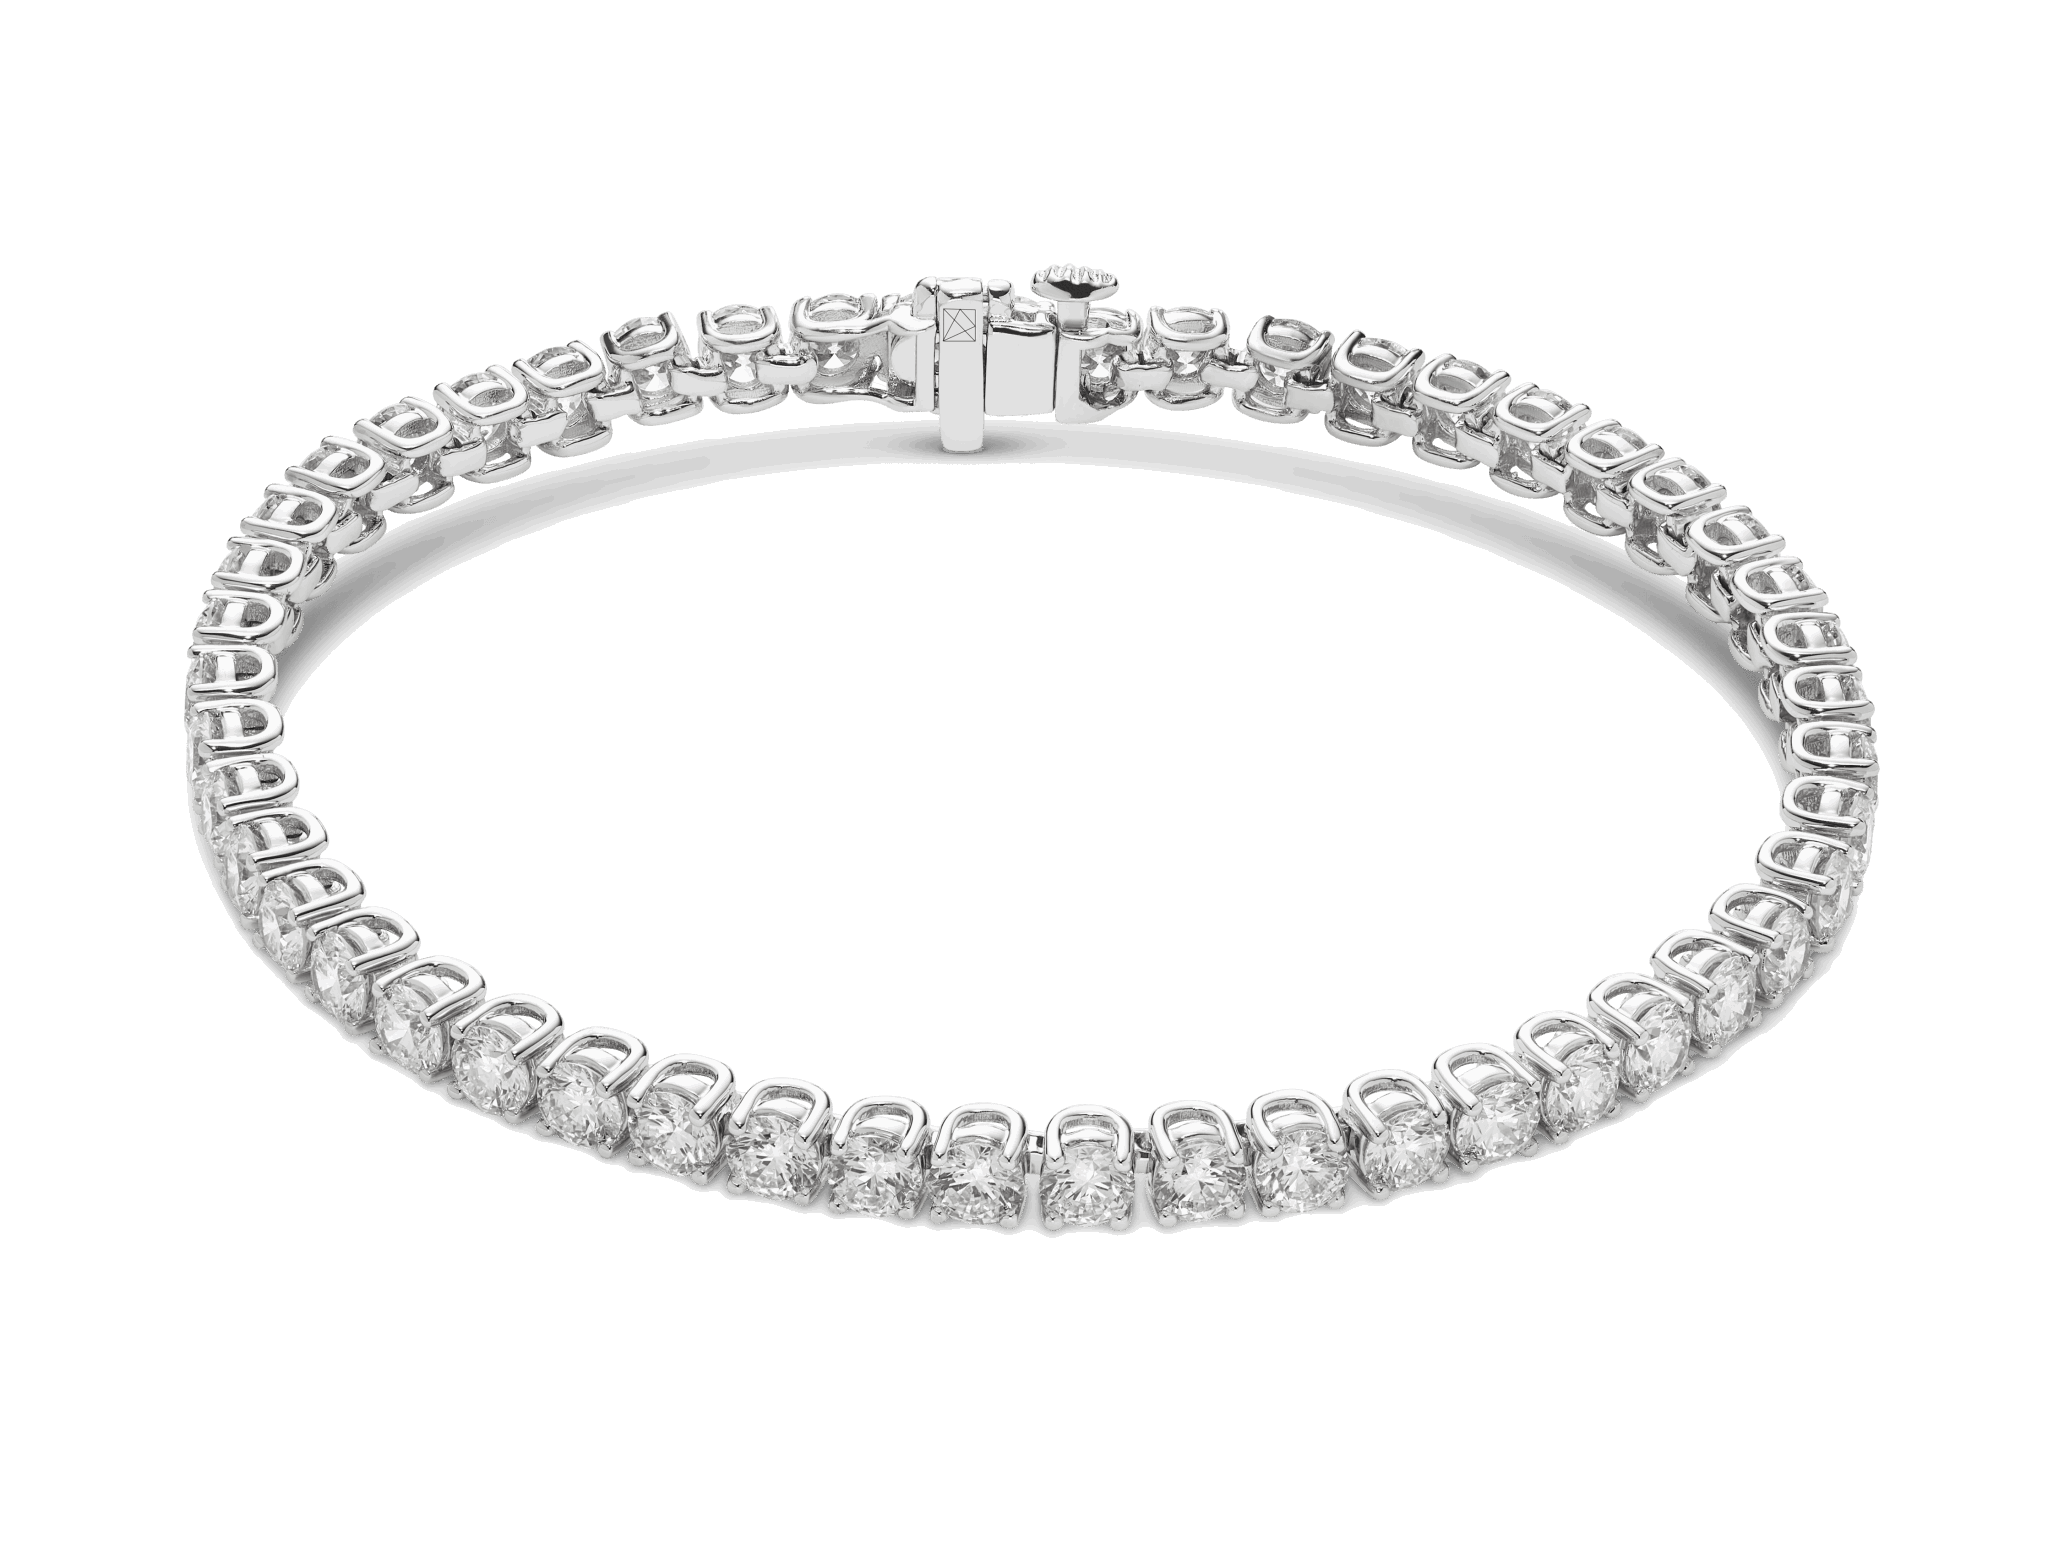 Lab-Grown Diamond Medium Tennis Bracelet - G/H color, 6.5" length | White - #Lightbox Jewelry#